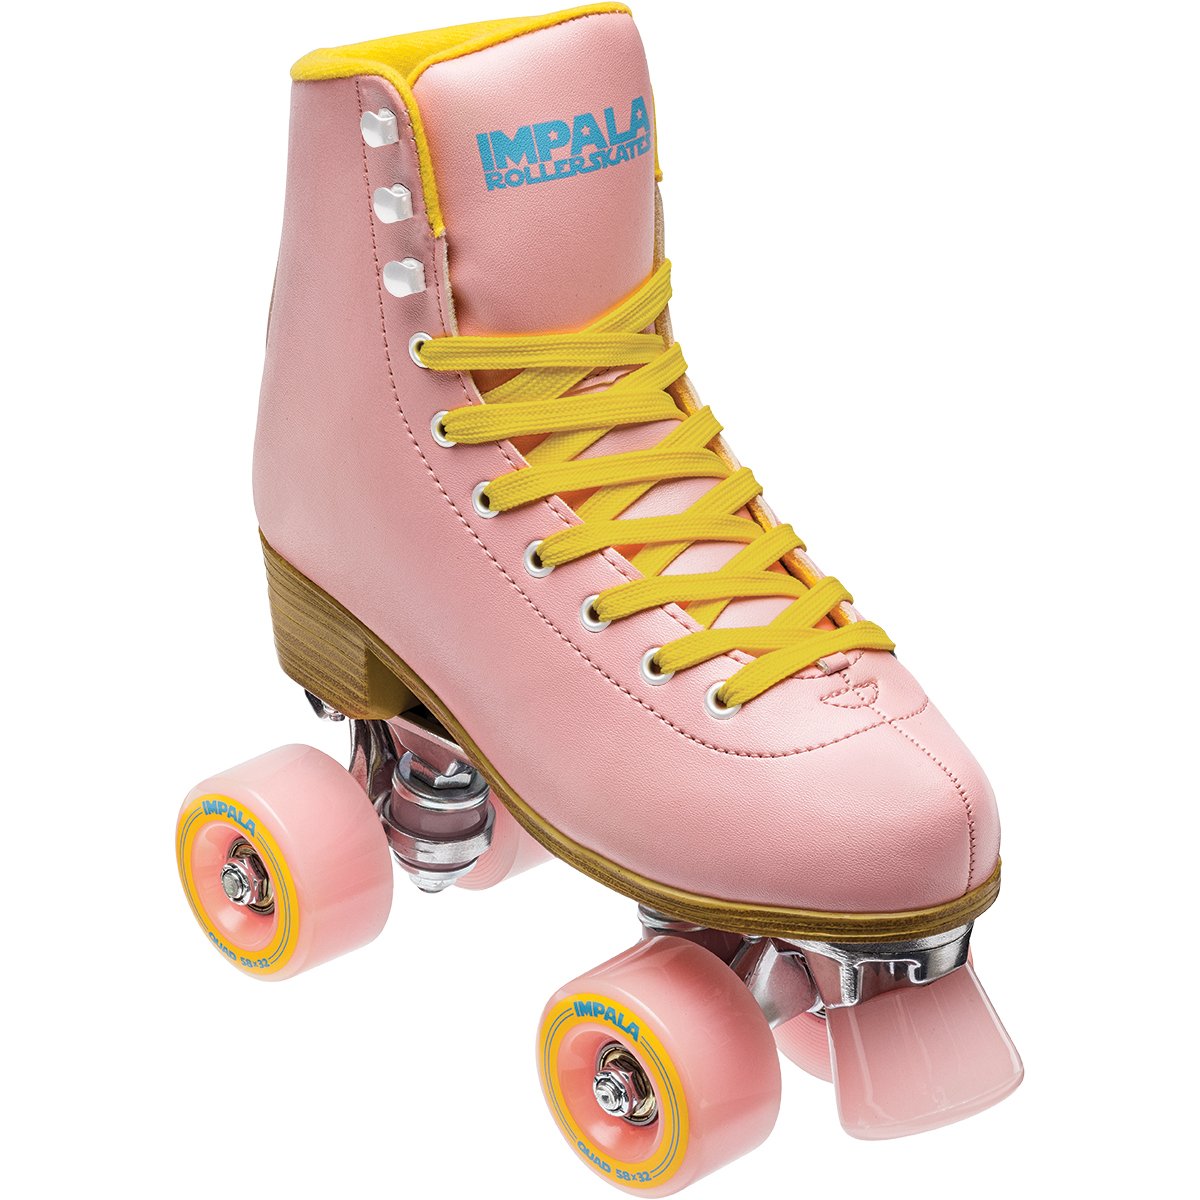 Impala Sidewalk Quad-Roller Skate Pink/Yellow 